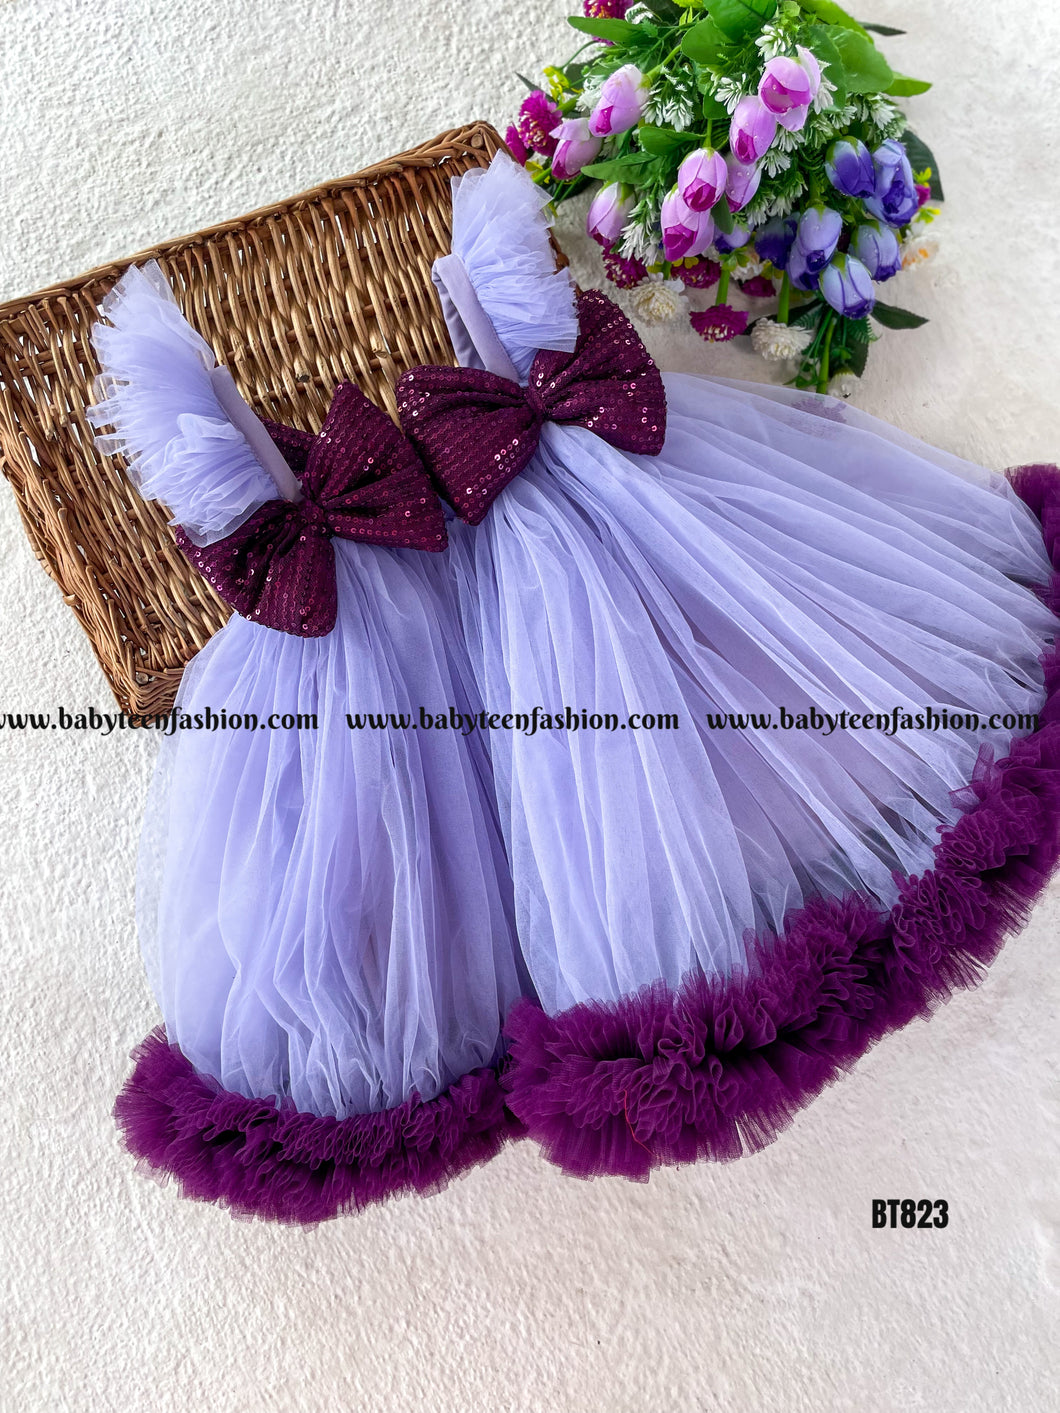 BT823 Lavender Dream Dress with Sparkling Bows